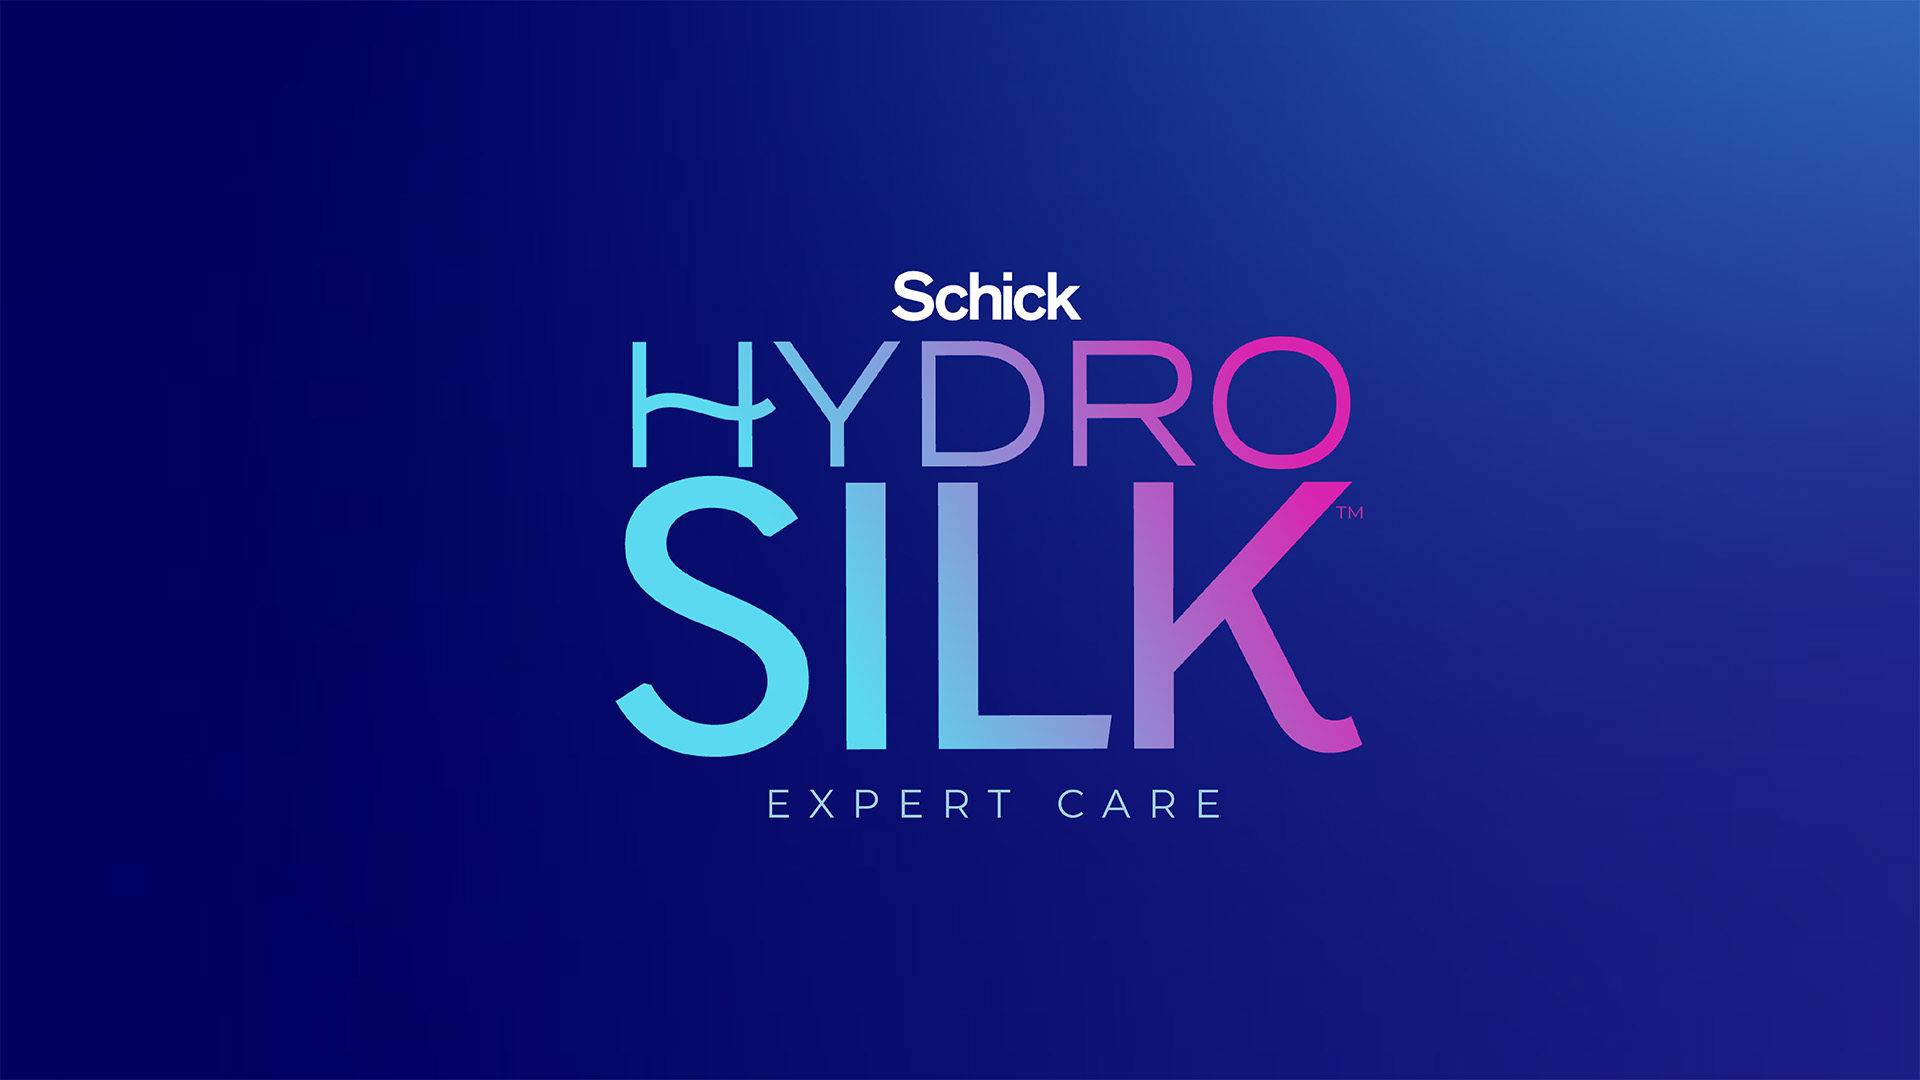 JDO Rebrand of Hydro Silk Raises the Bar on Expert Care